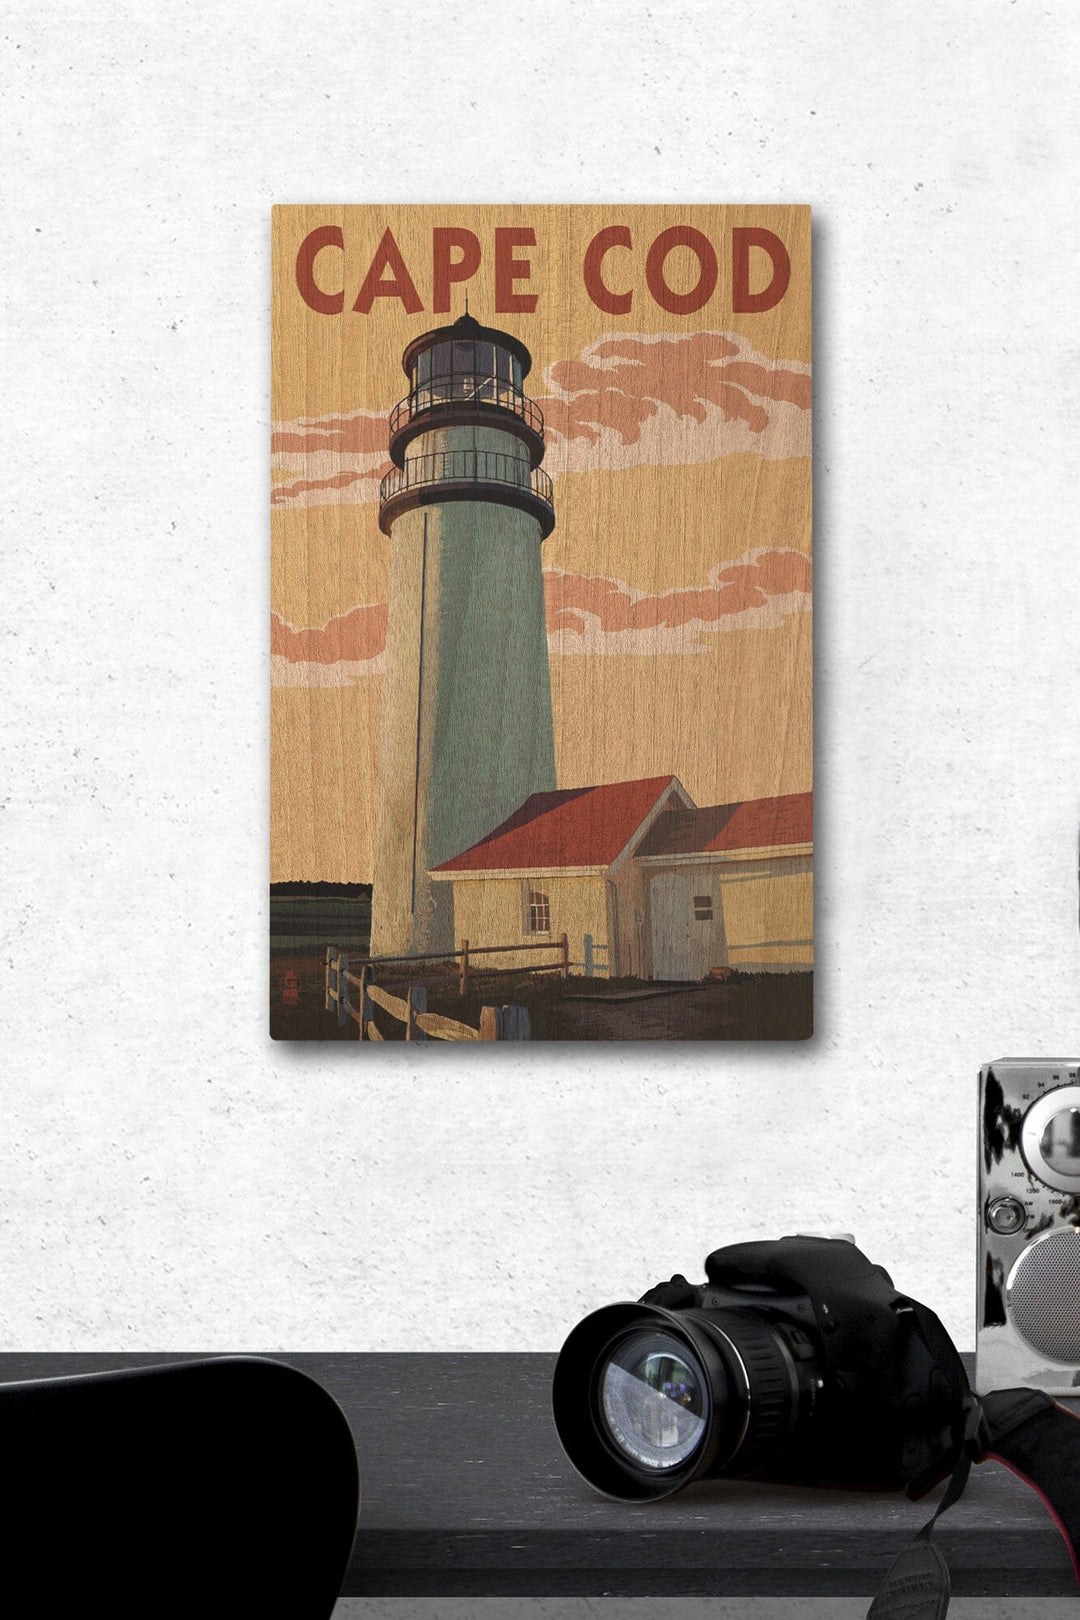 Cape Cod, Massachusetts, Lighthouse, Lantern Press Artwork, Wood Signs and Postcards Wood Lantern Press 12 x 18 Wood Gallery Print 